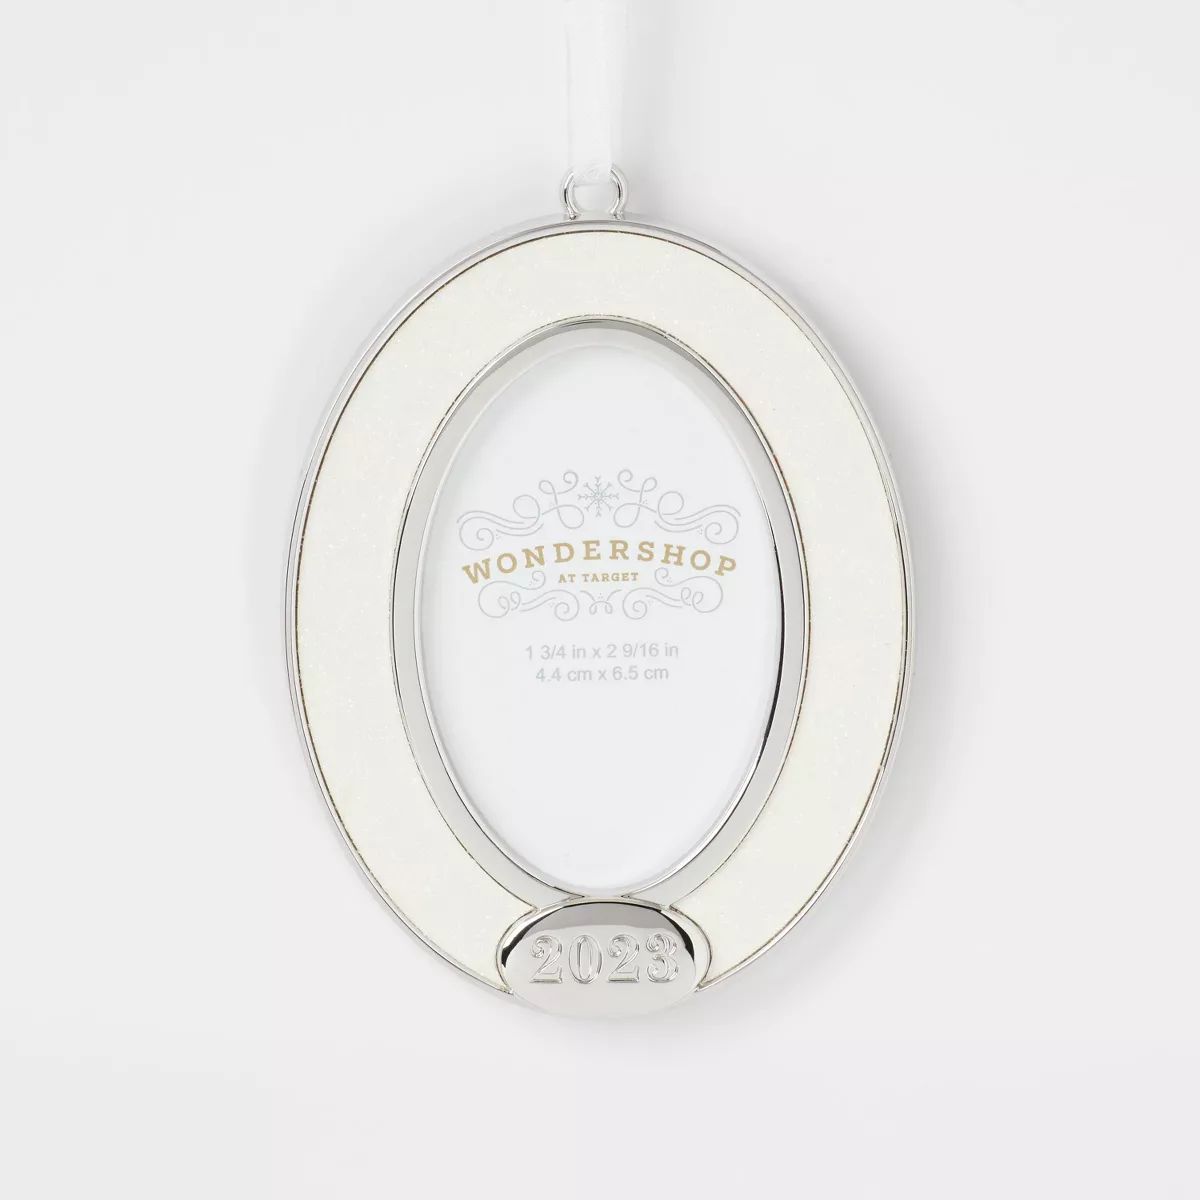 2023 Glittered Metal Oval Picture Frame Christmas Tree Ornament Silver - Wondershop™ | Target